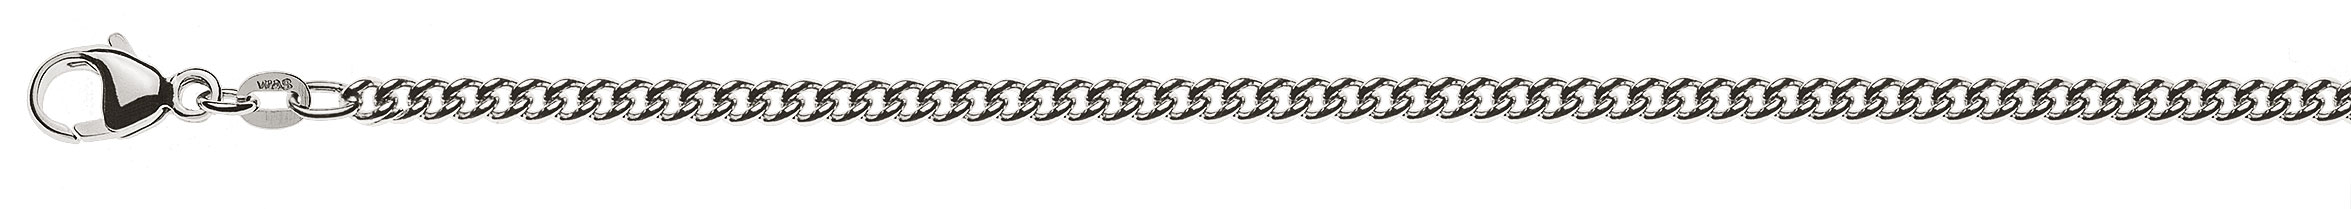 AURONOS Prestige Necklace white gold 18K round curb chain 50cm 2.8mm